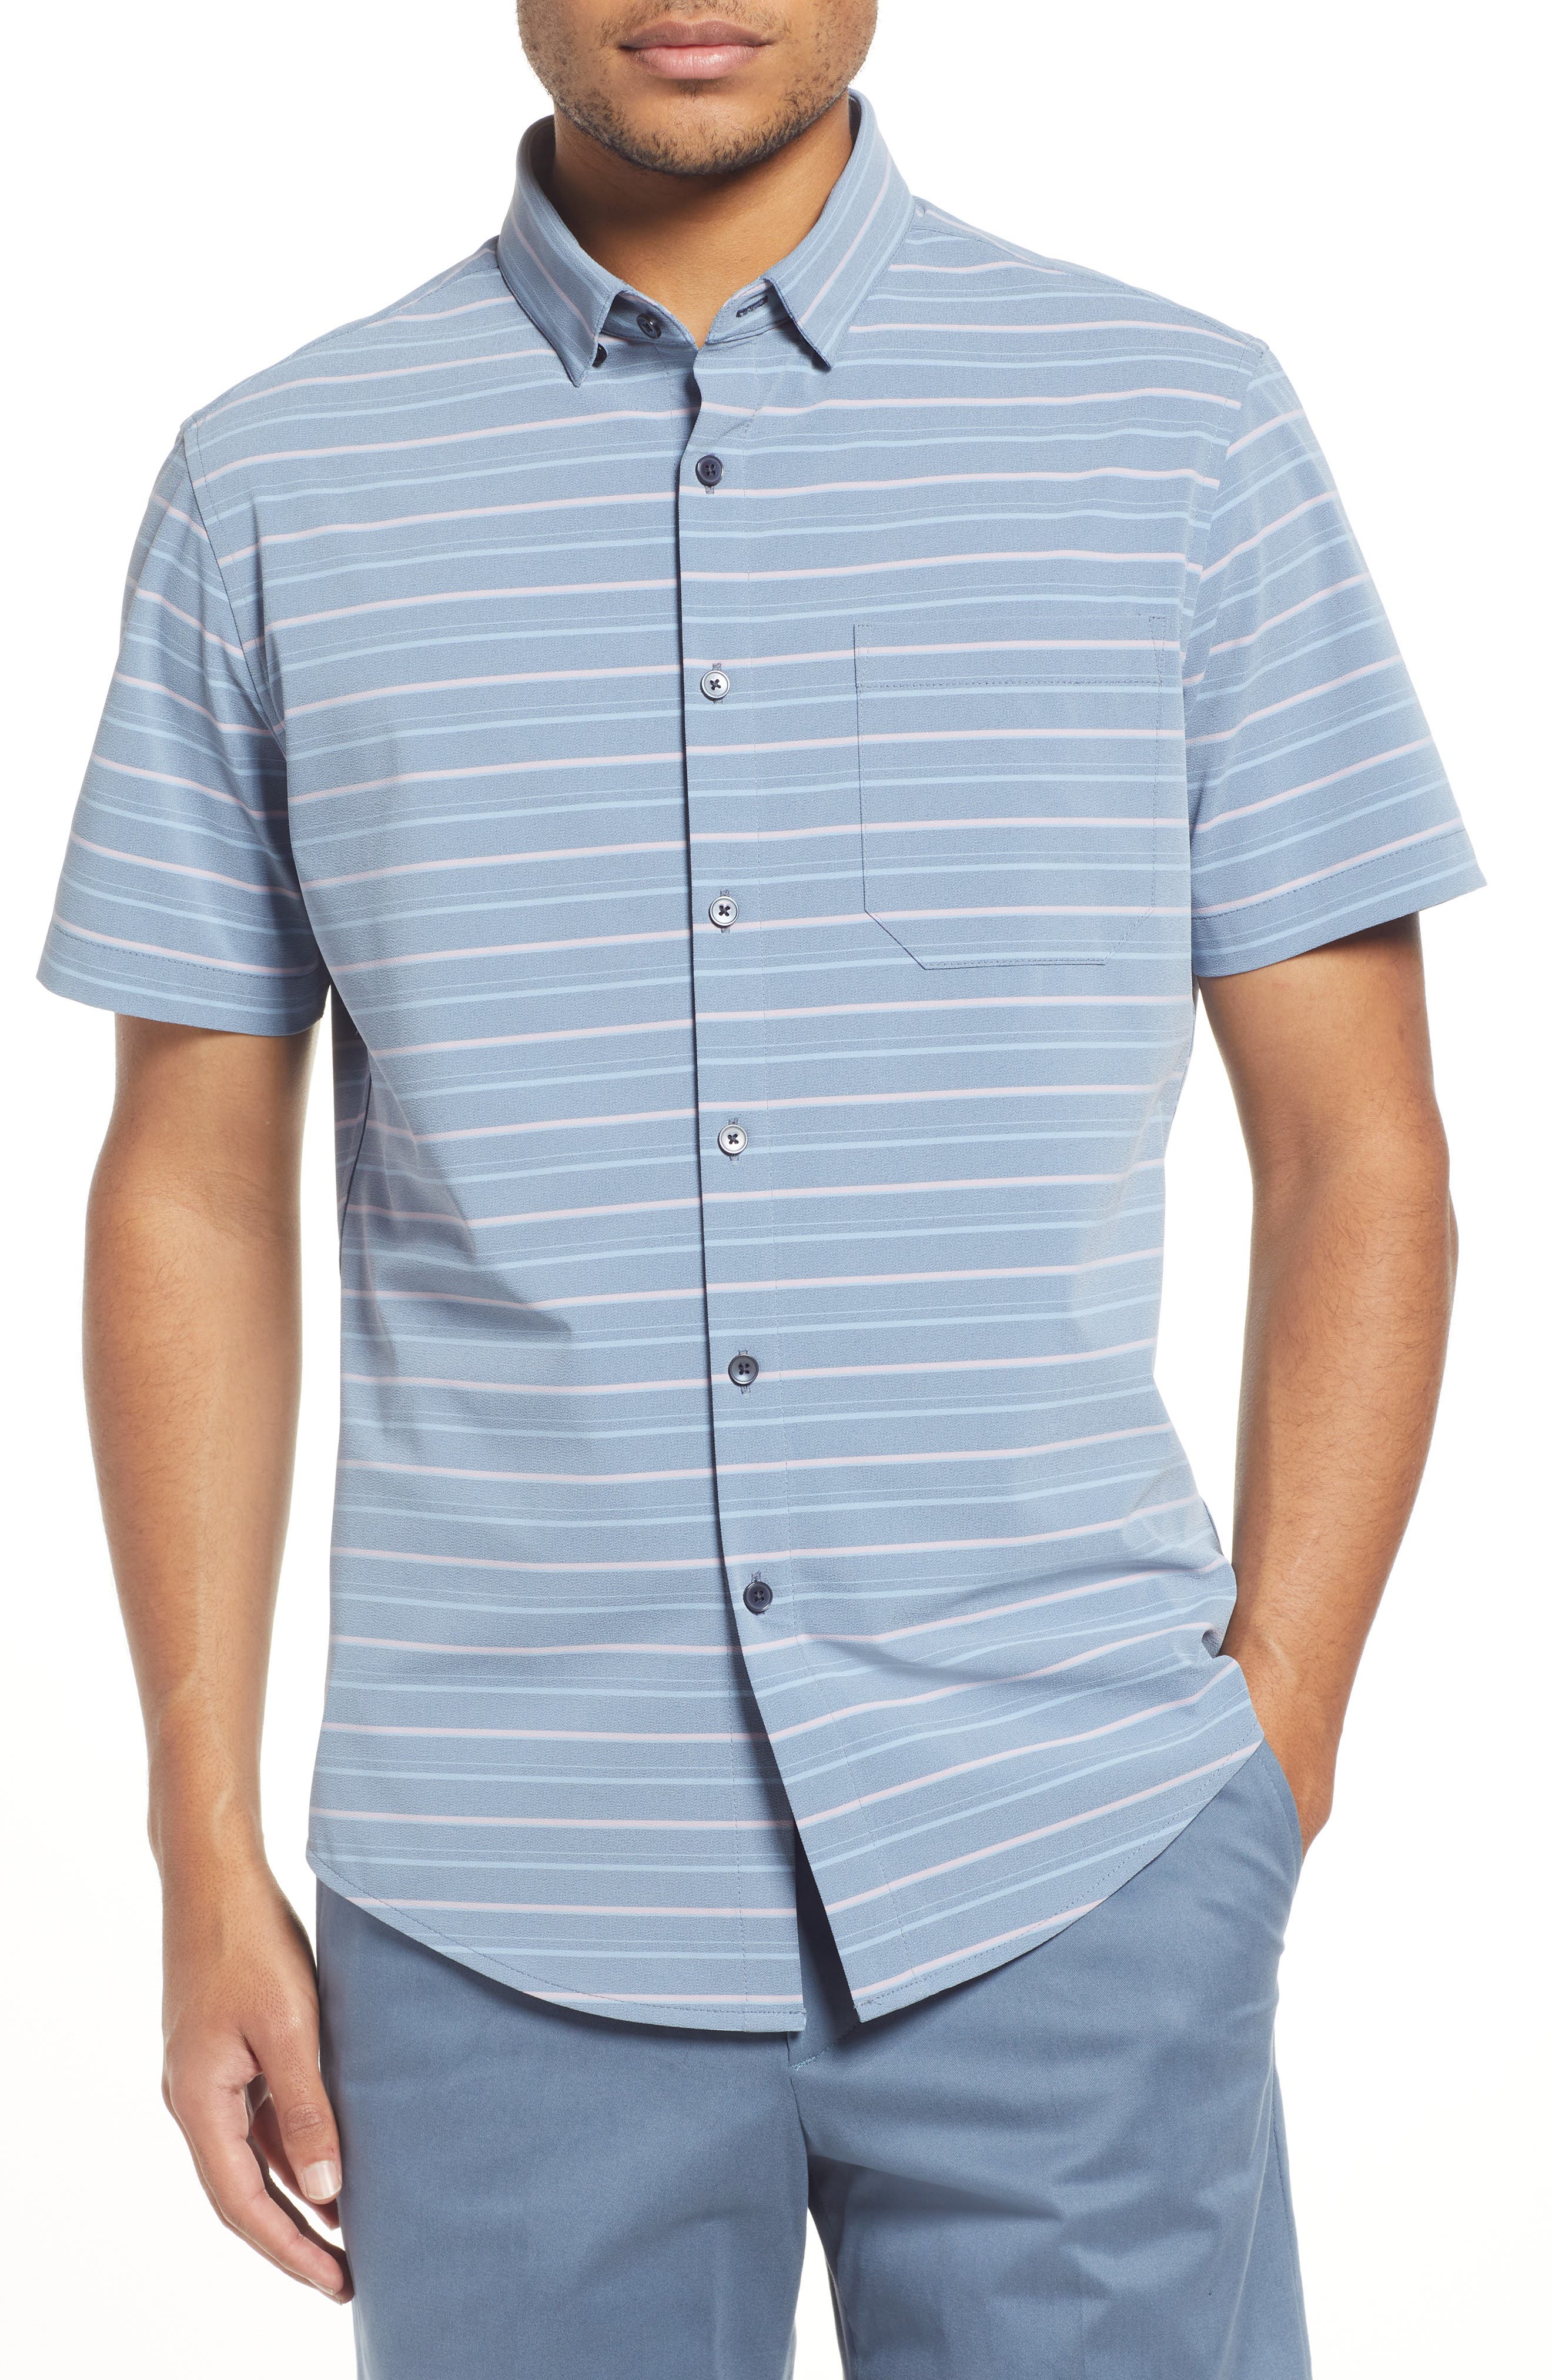 Details about   NEW Mizzen Main Mens Shirt XL Trim Blue White Striped Wilkes $145 